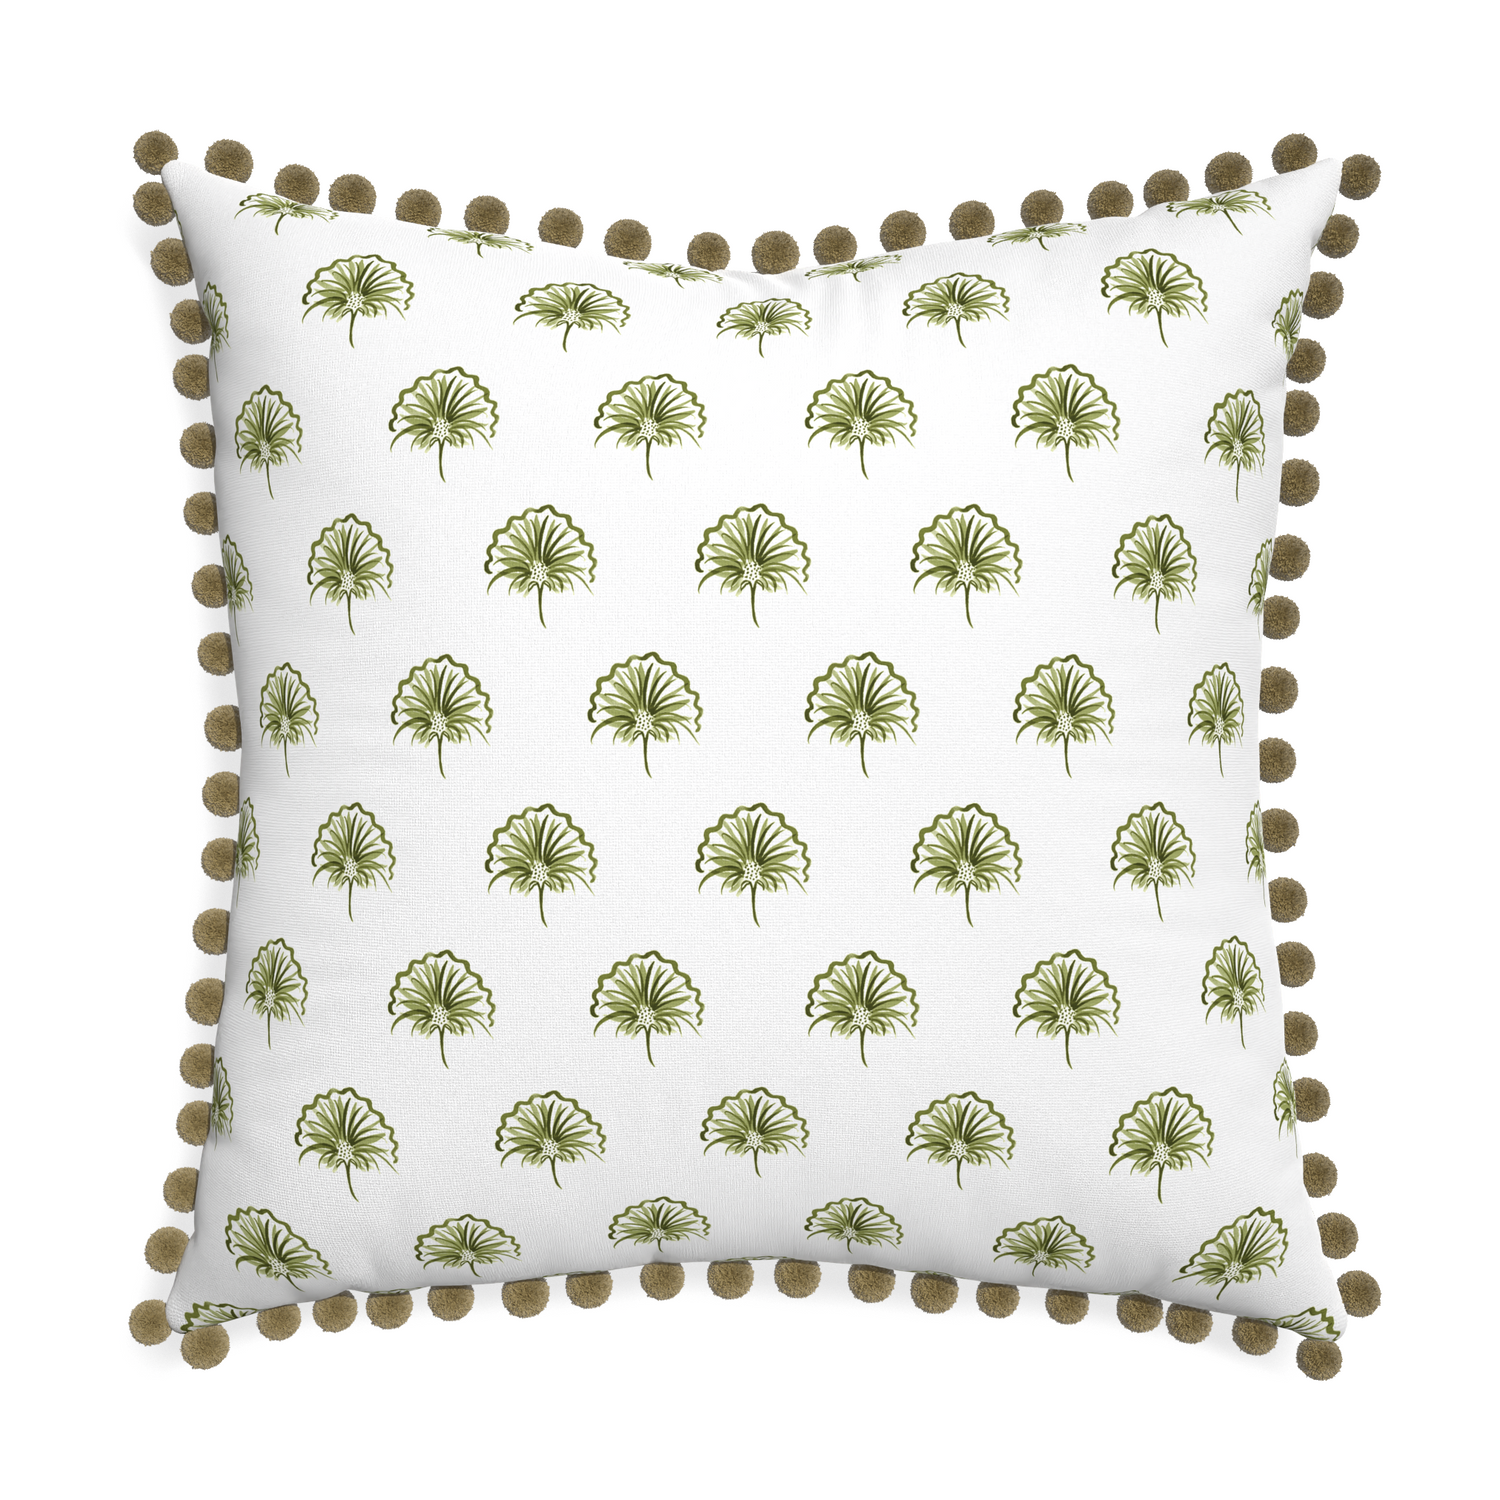 Euro-sham penelope moss custom pillow with olive pom pom on white background